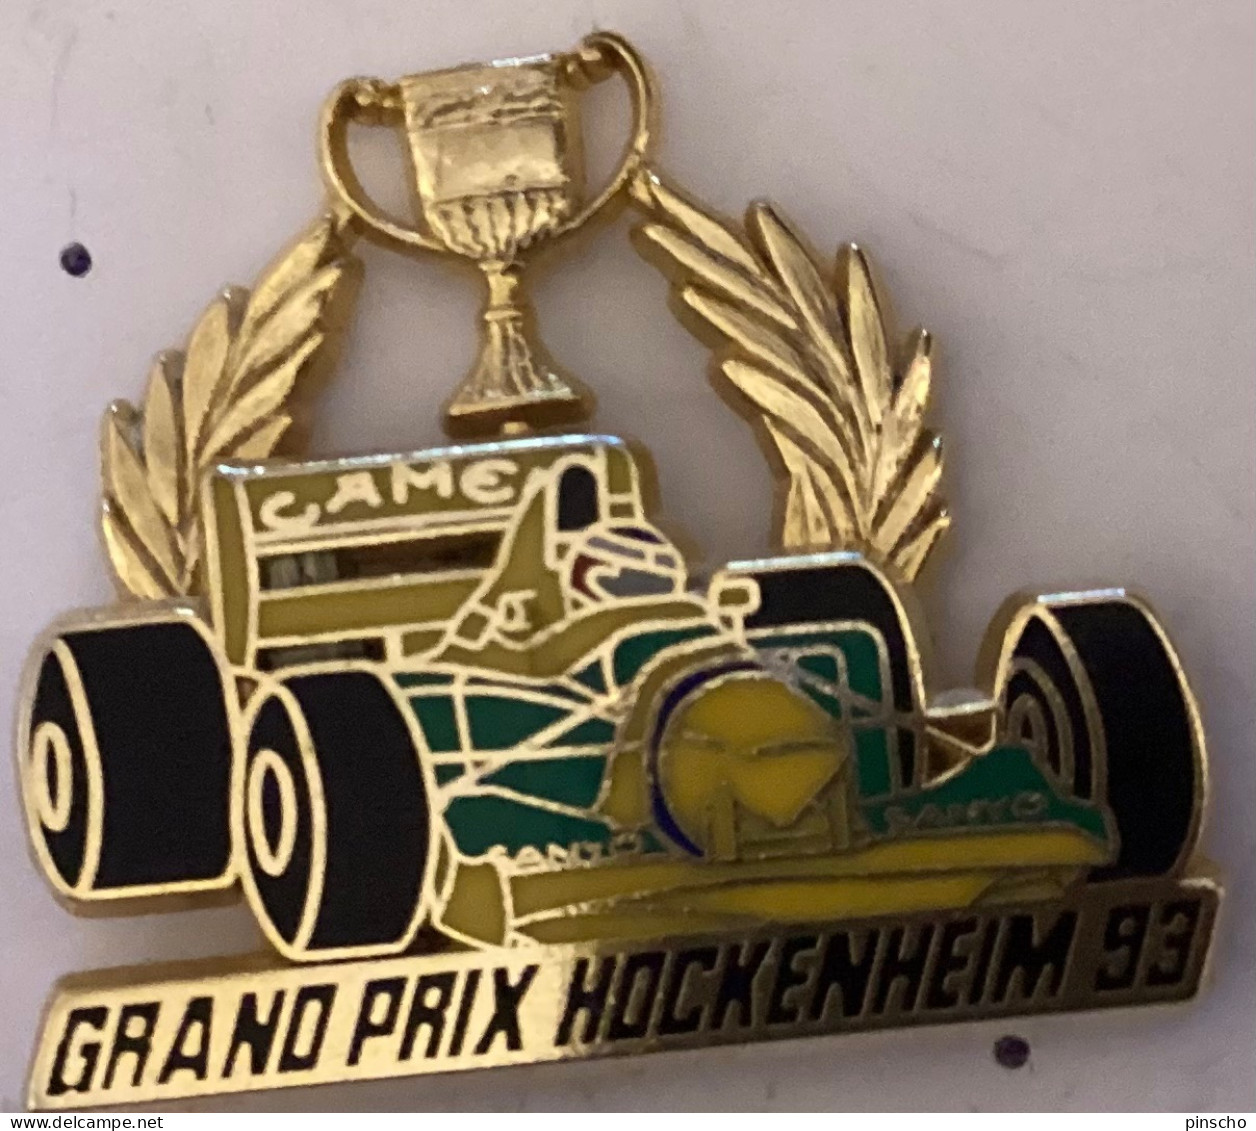 Pin S GRAND PRIX HOCHENHEIM 93 - F1